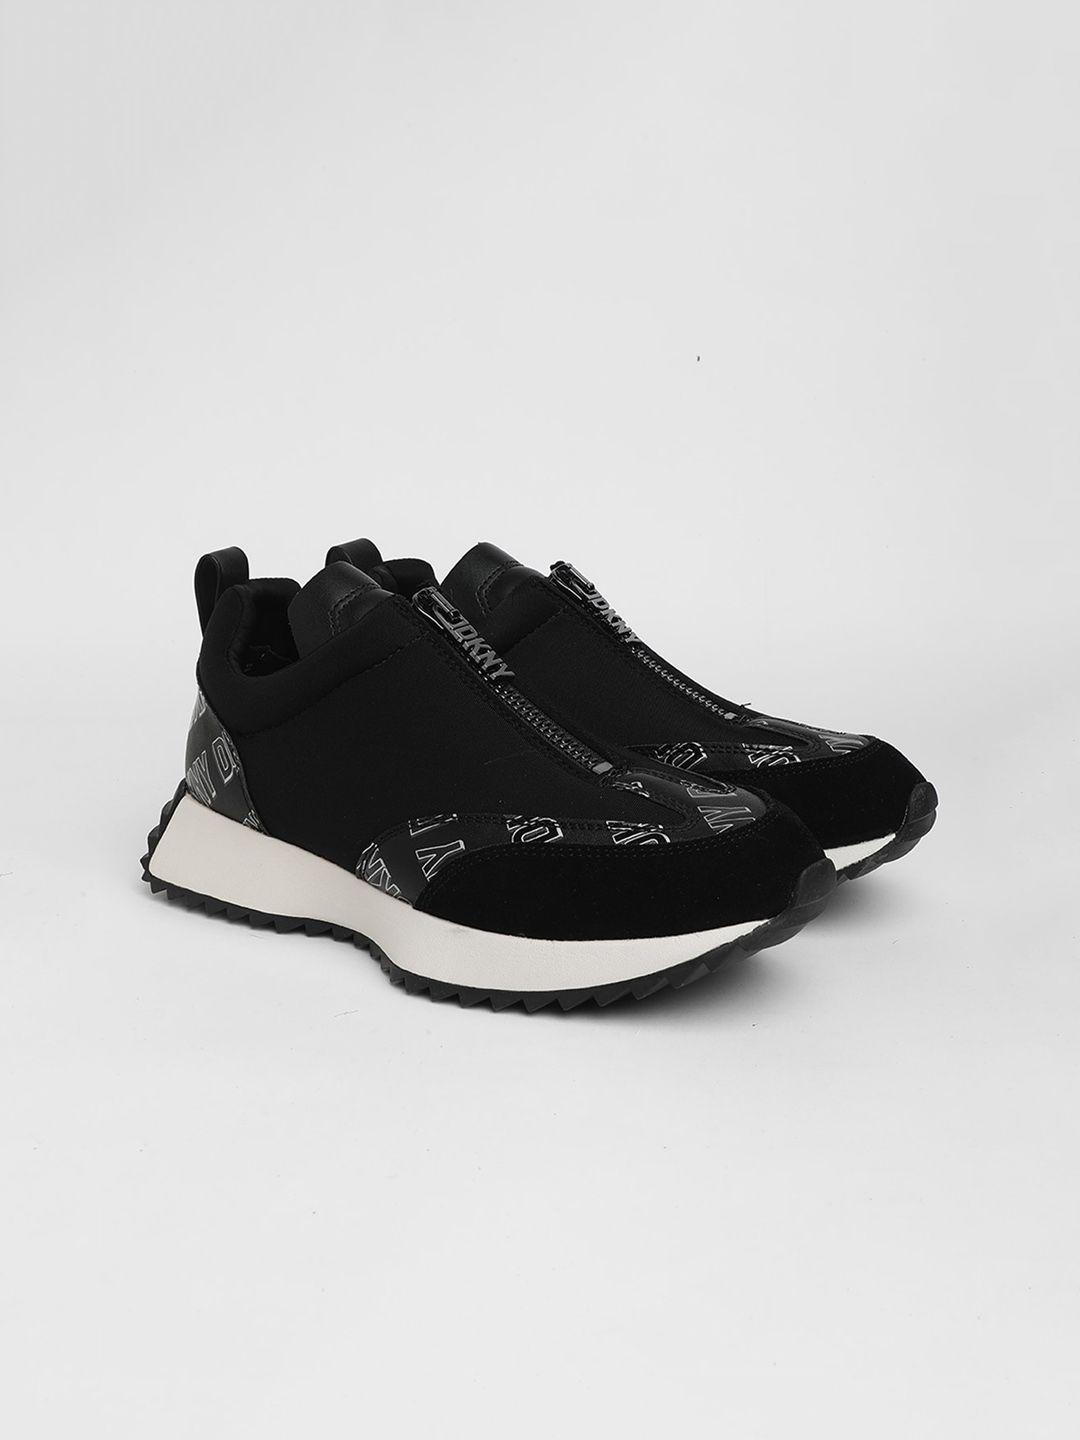 dkny women woven design comfort insole contrast sole slip-on sneakers